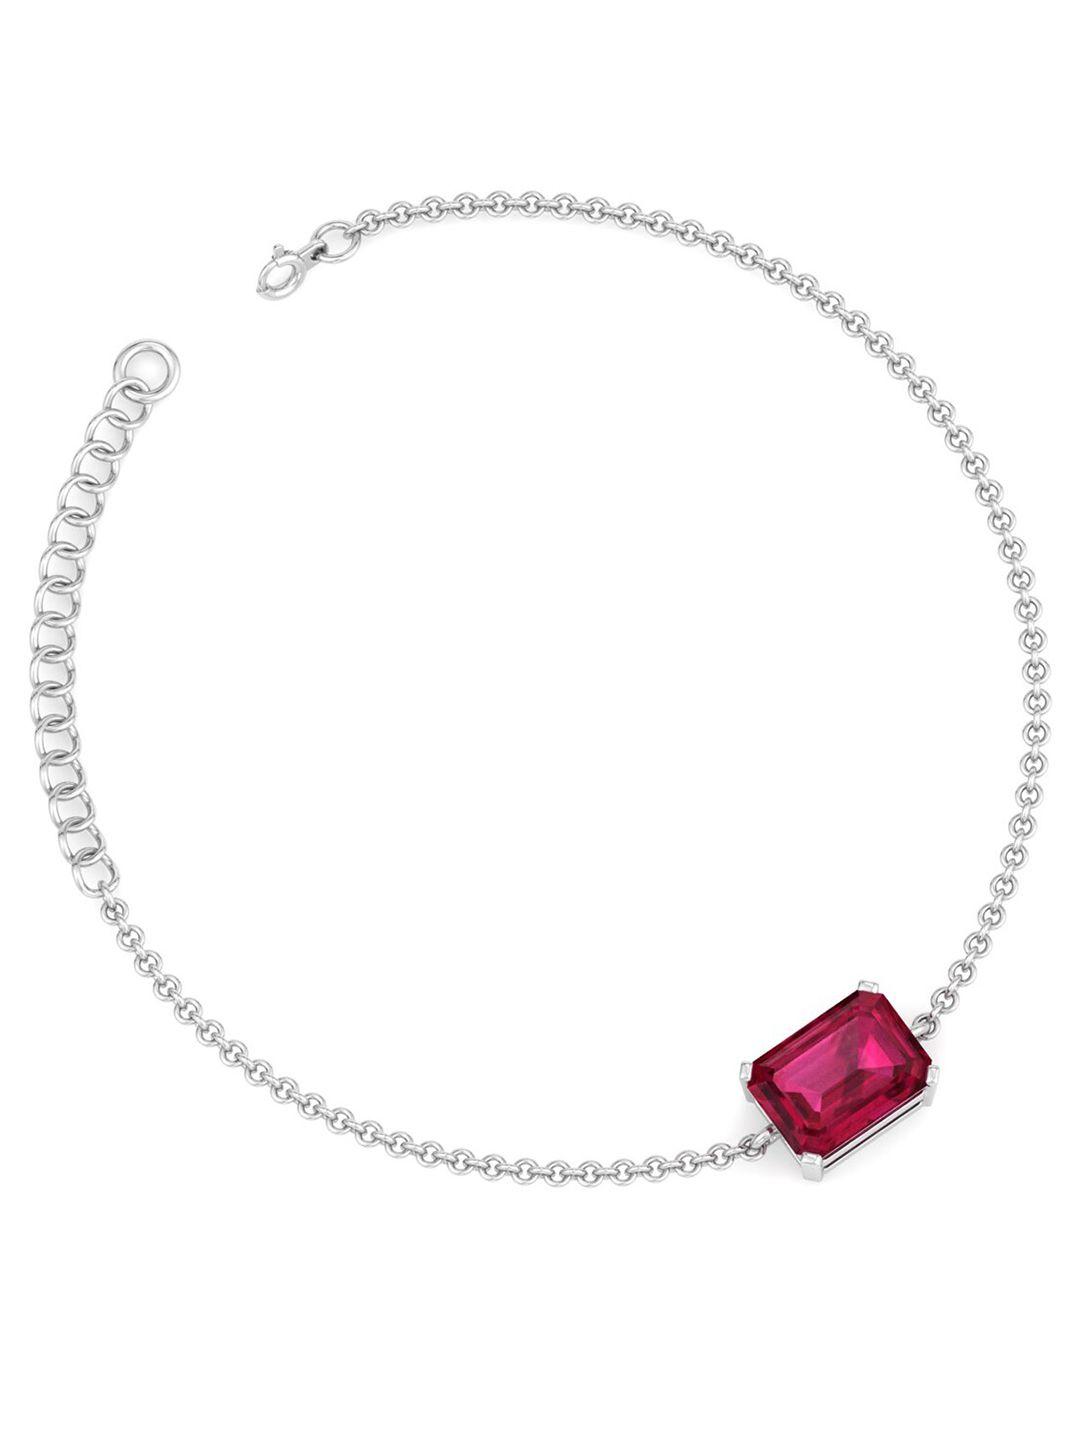 inddus jewels women sterling silver cubic zirconia link bracelet